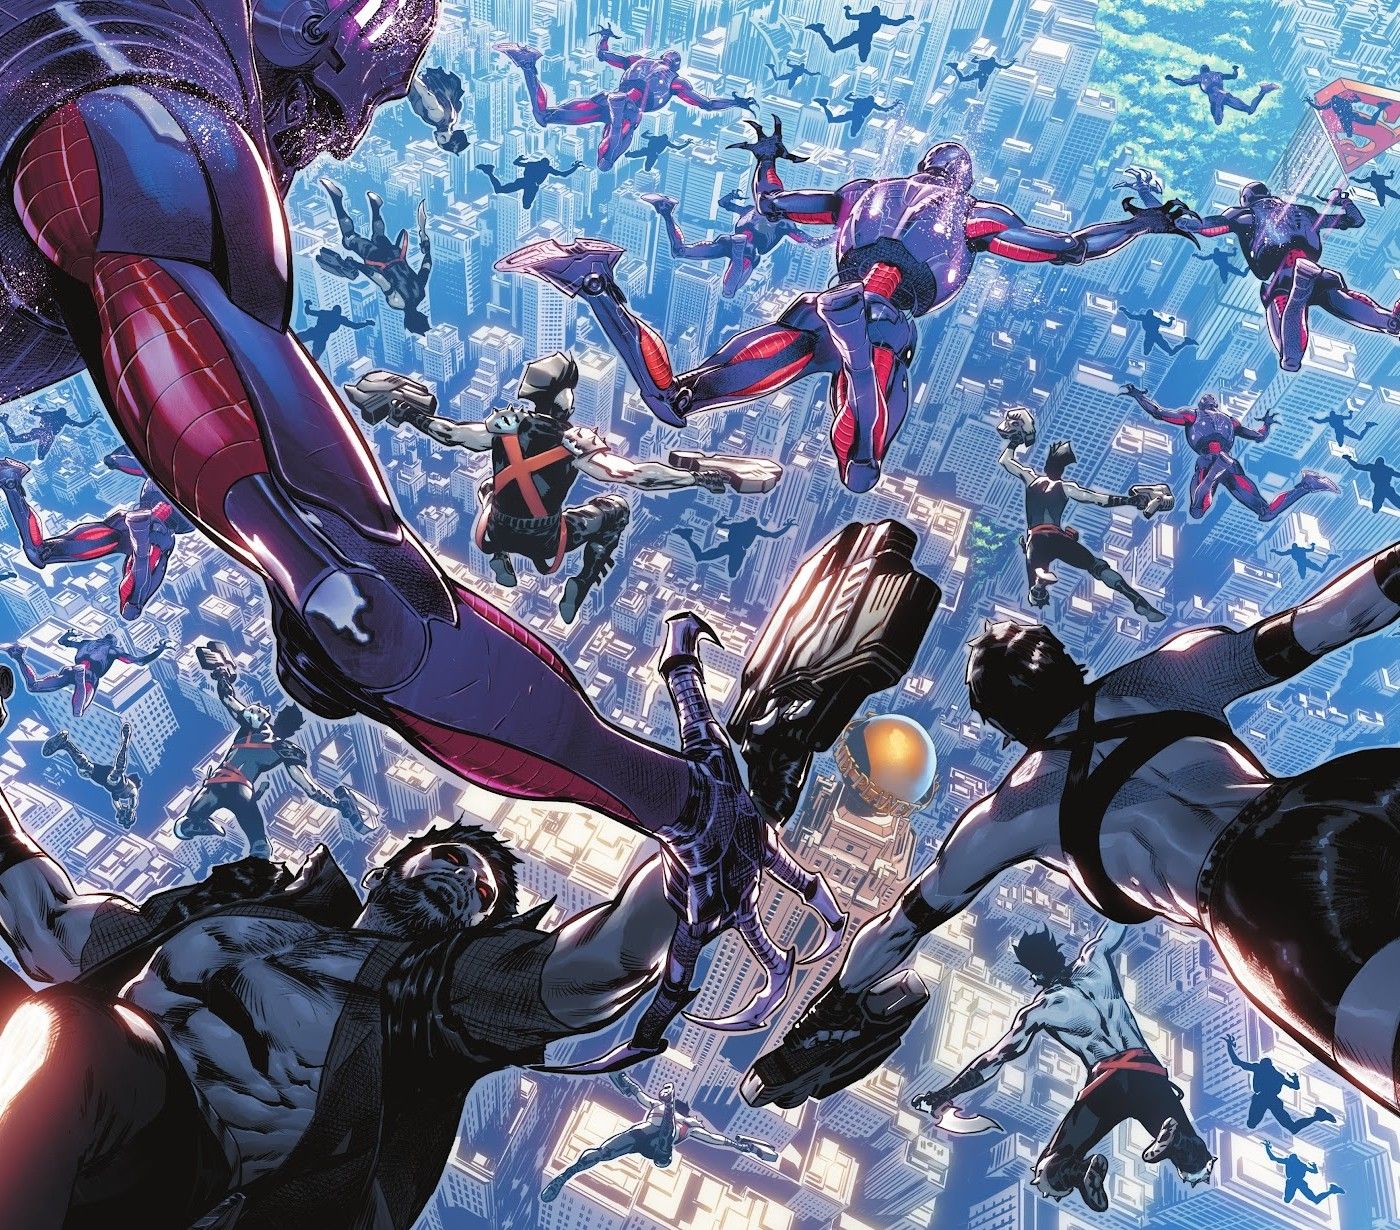 Brainiac's Drones drop down on Superman's Metropolis